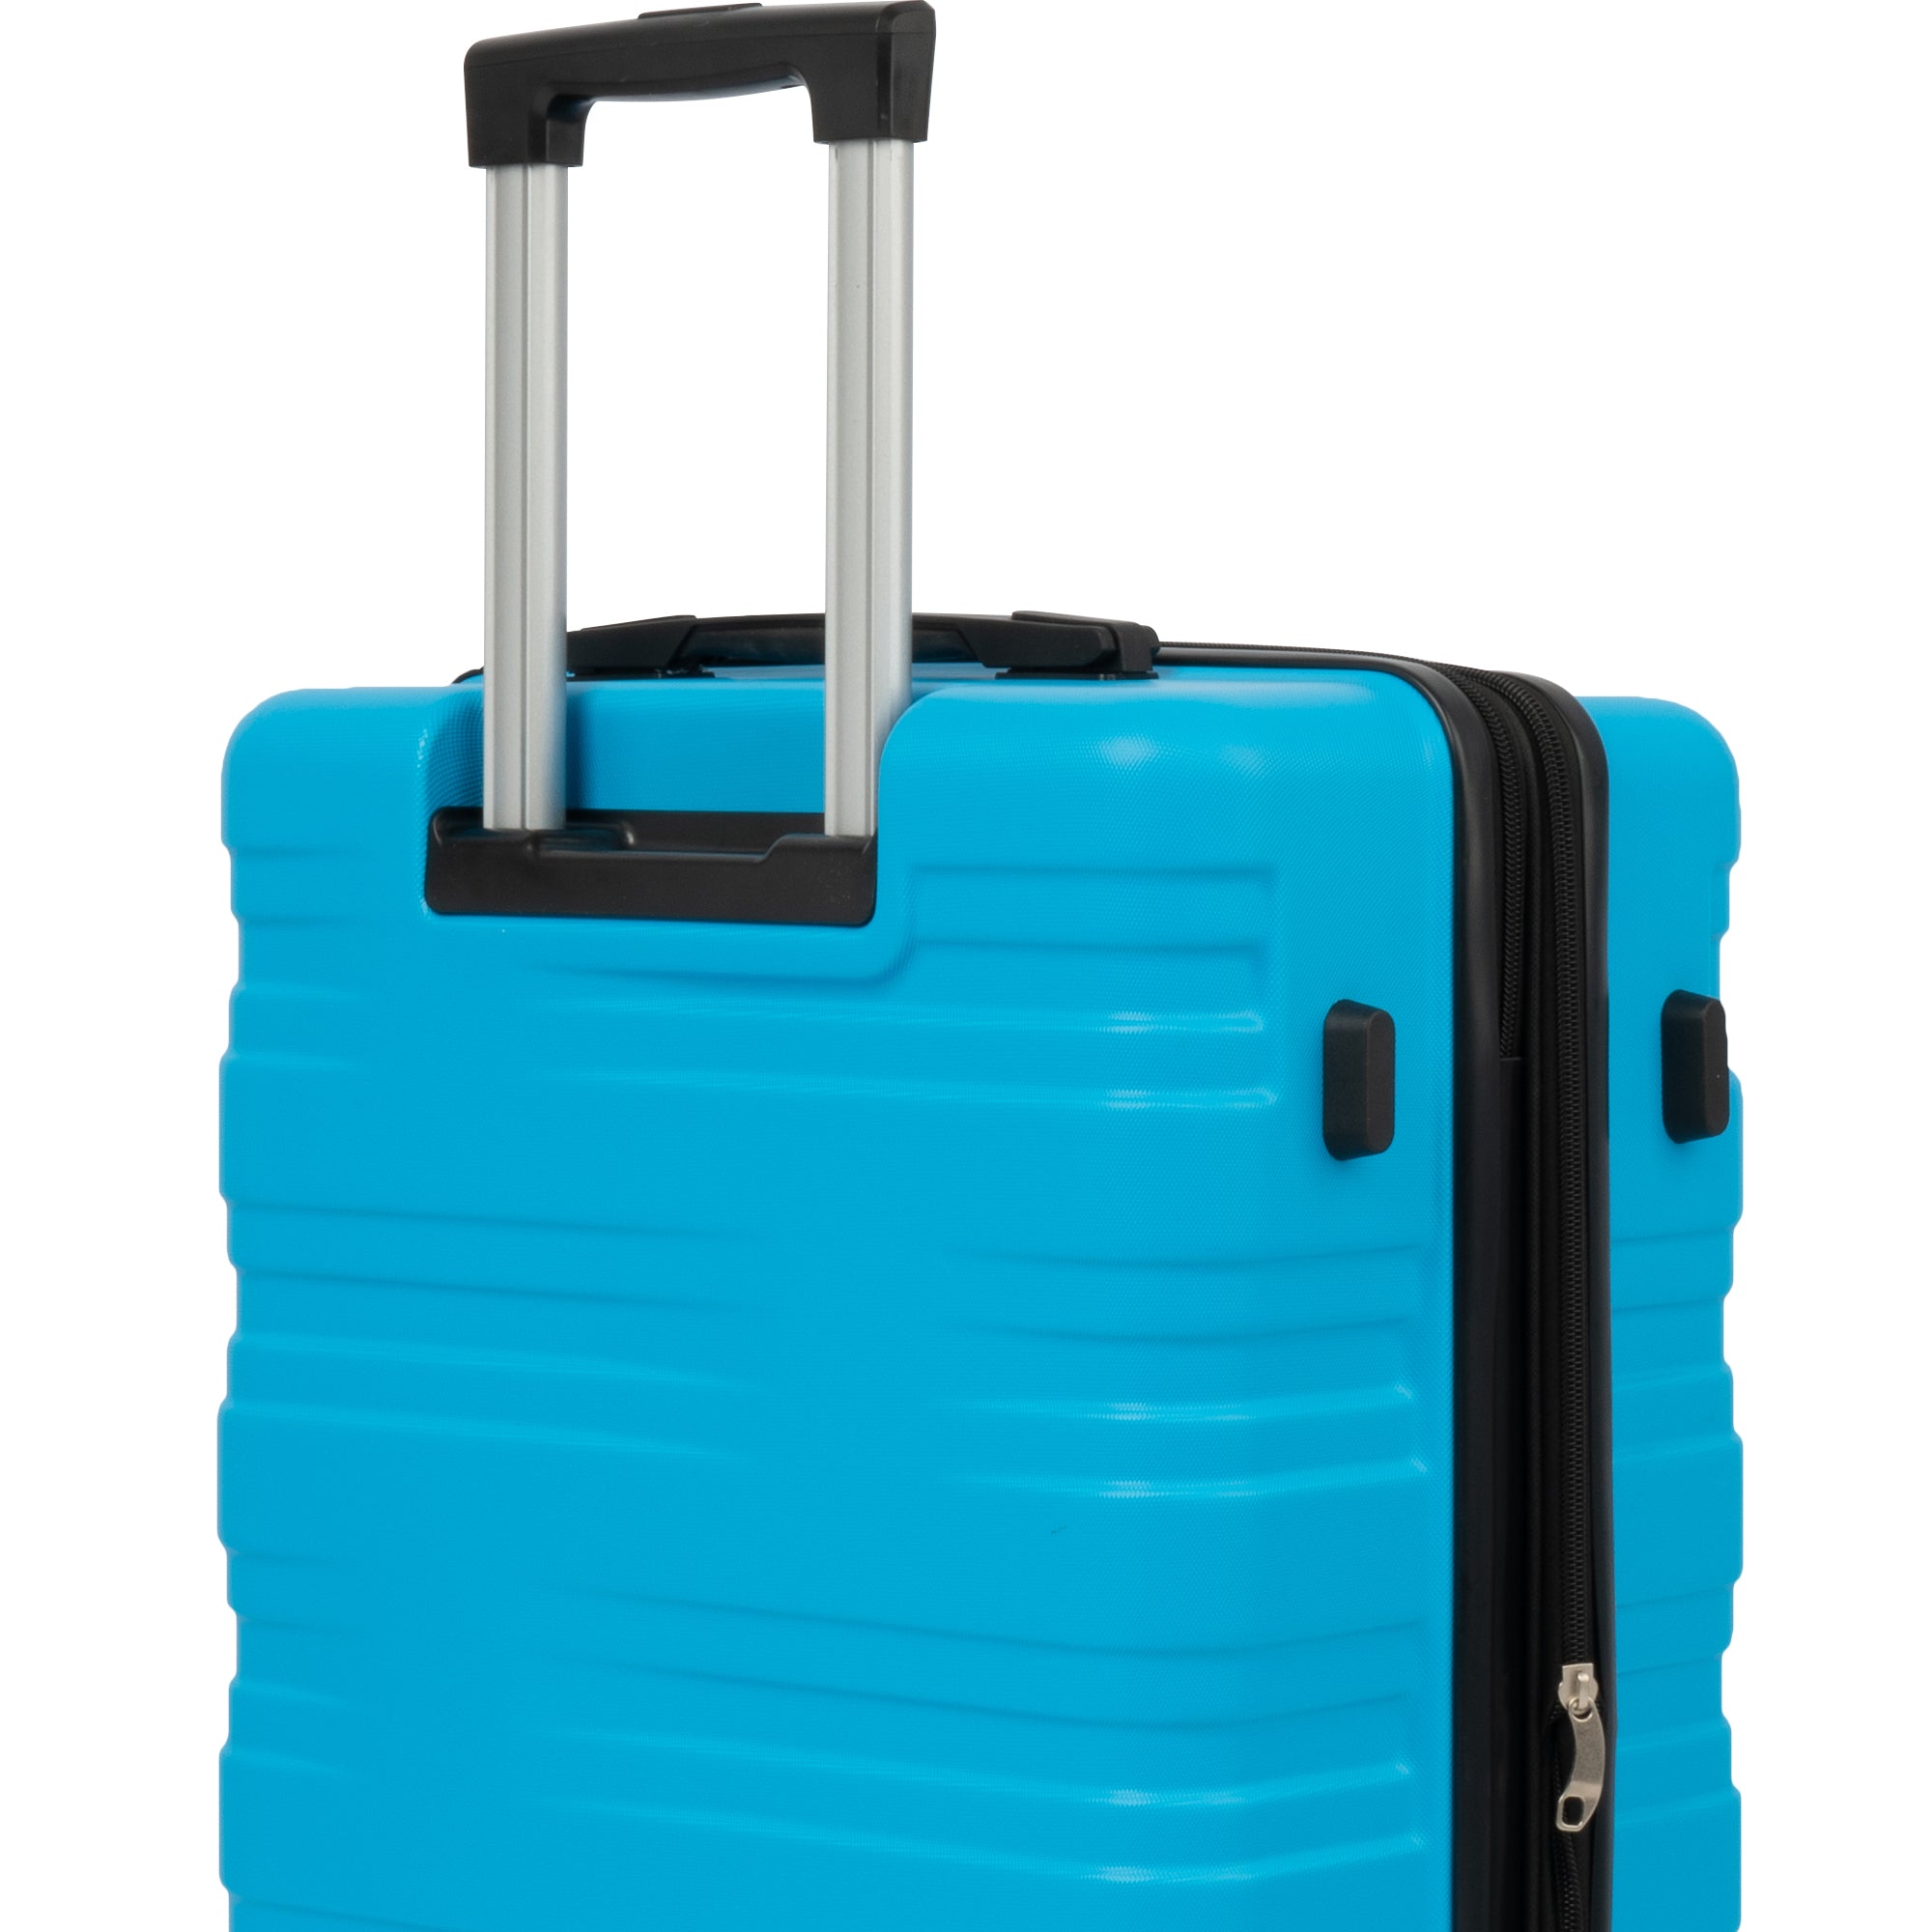 Merax Luggage with TSA Lock Spinner Wheels Hardside antique navy blue-abs